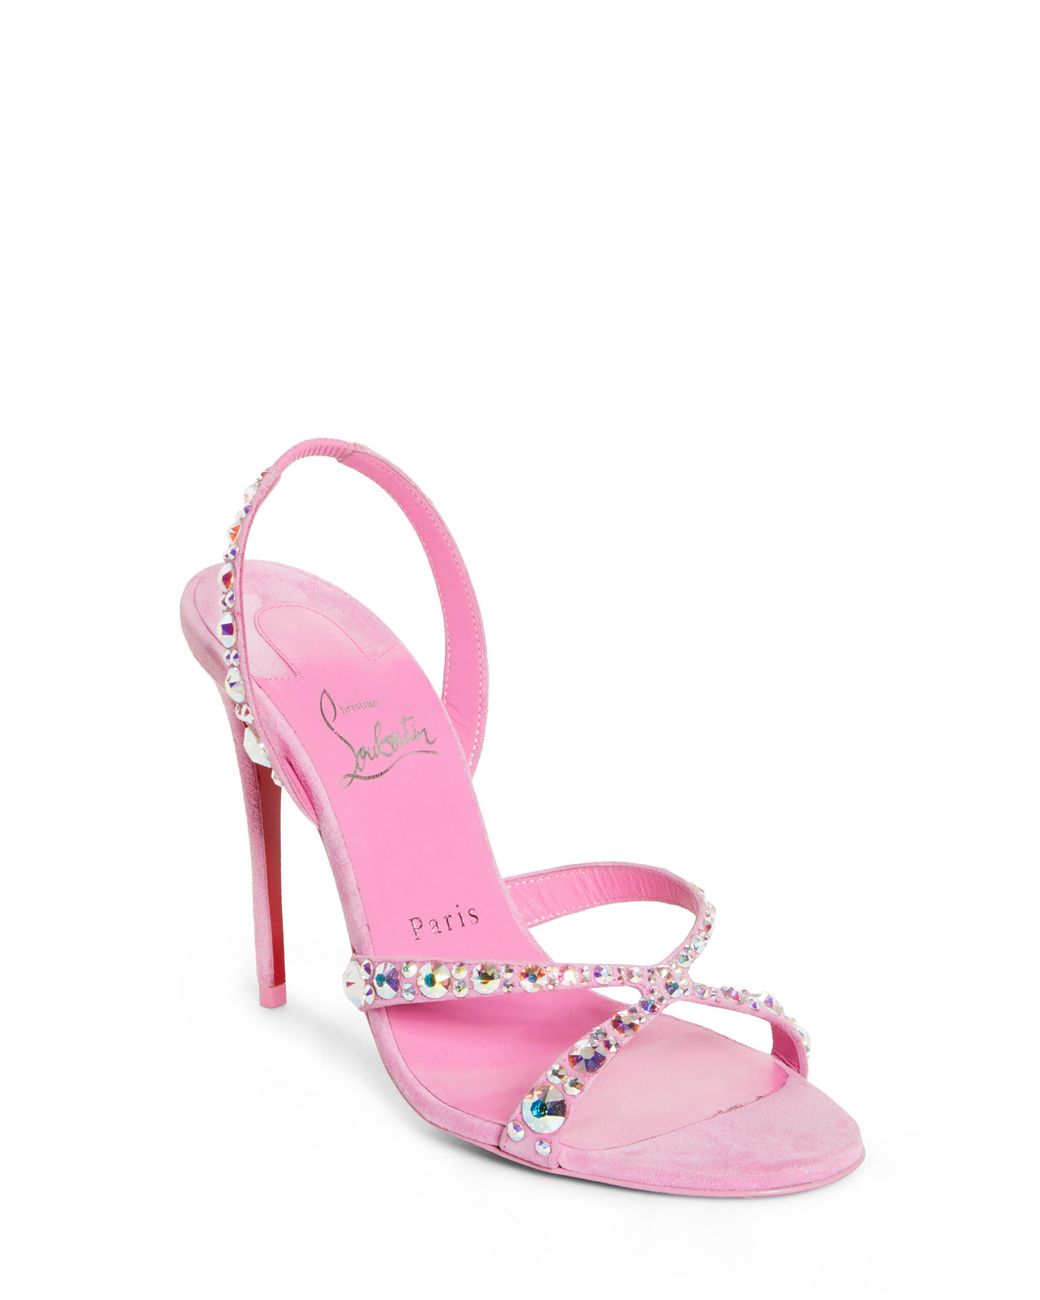 Christian Louboutin Emilie Crystal Embellished Sandal in Pink | Lyst